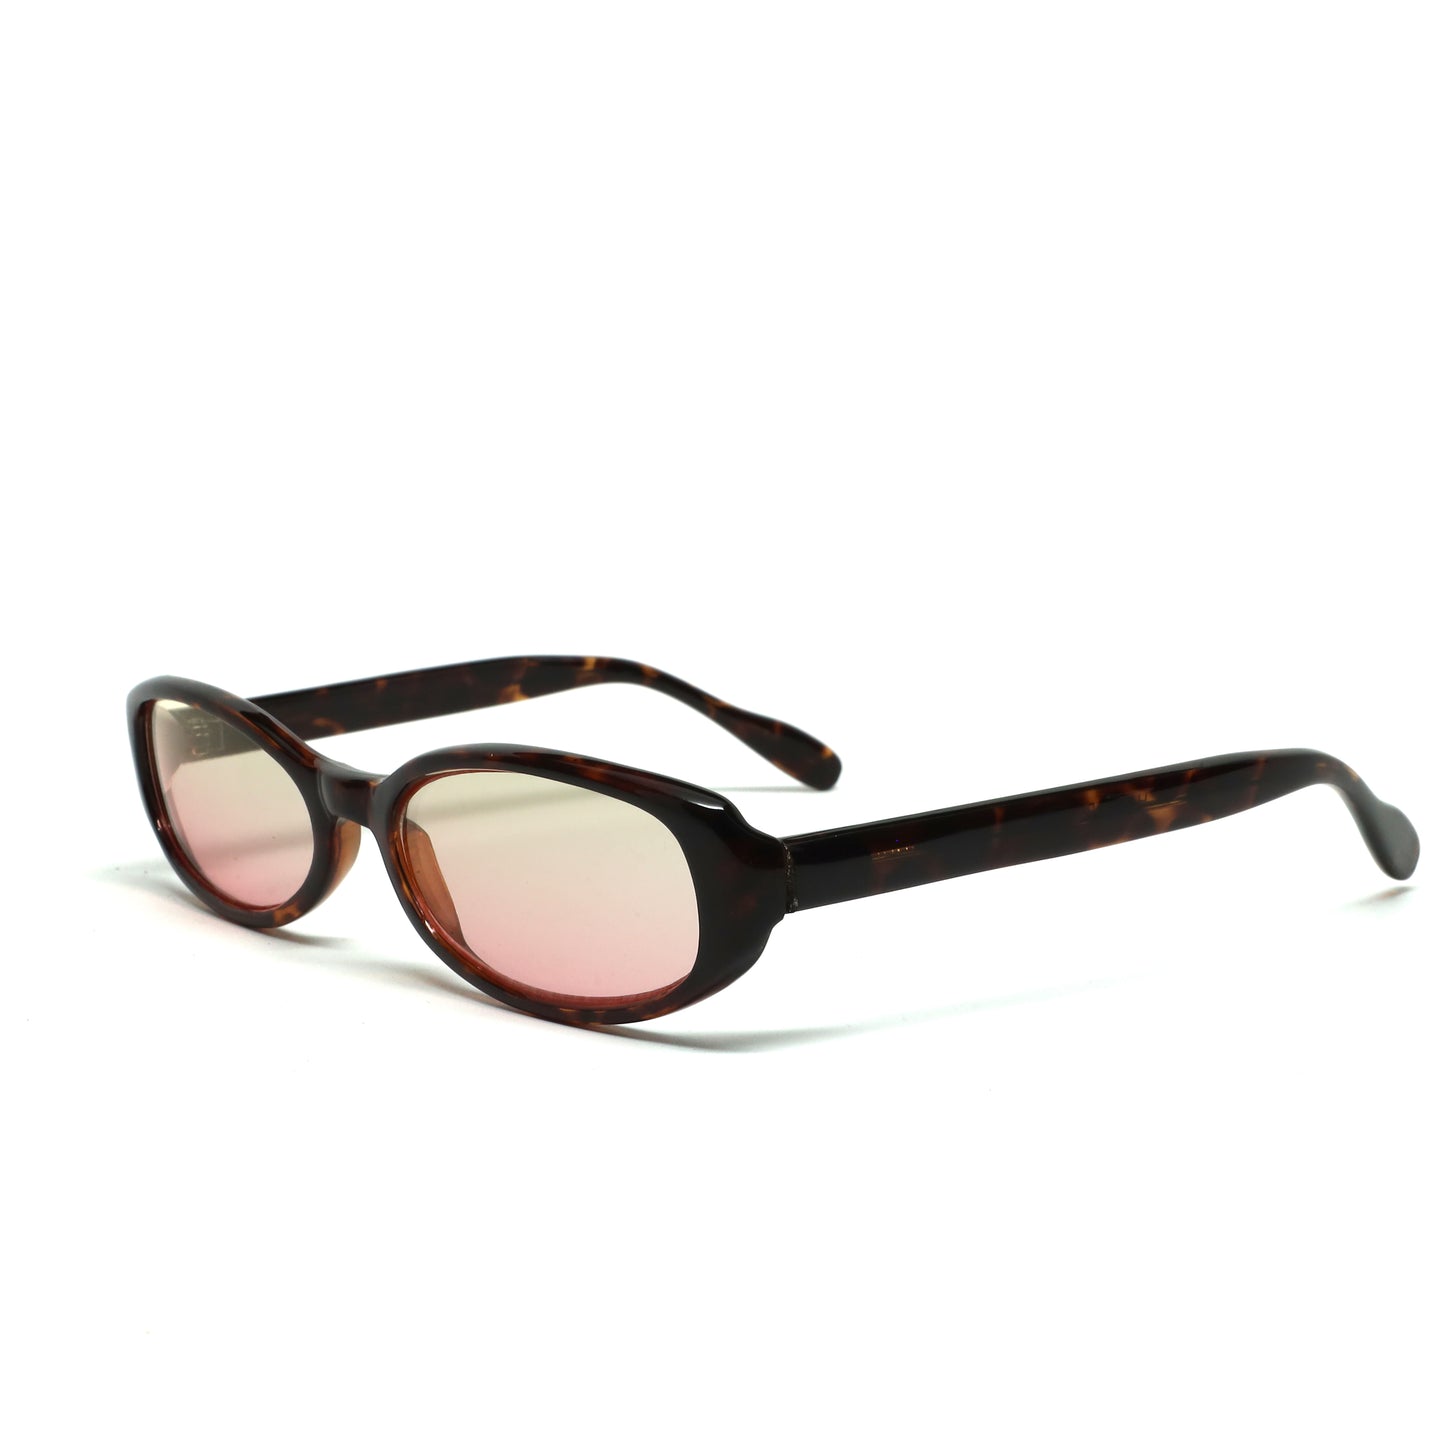 //RARE// Vintage 90s Deadstock Jane Original Oval Sunglasses - Gradient Pink